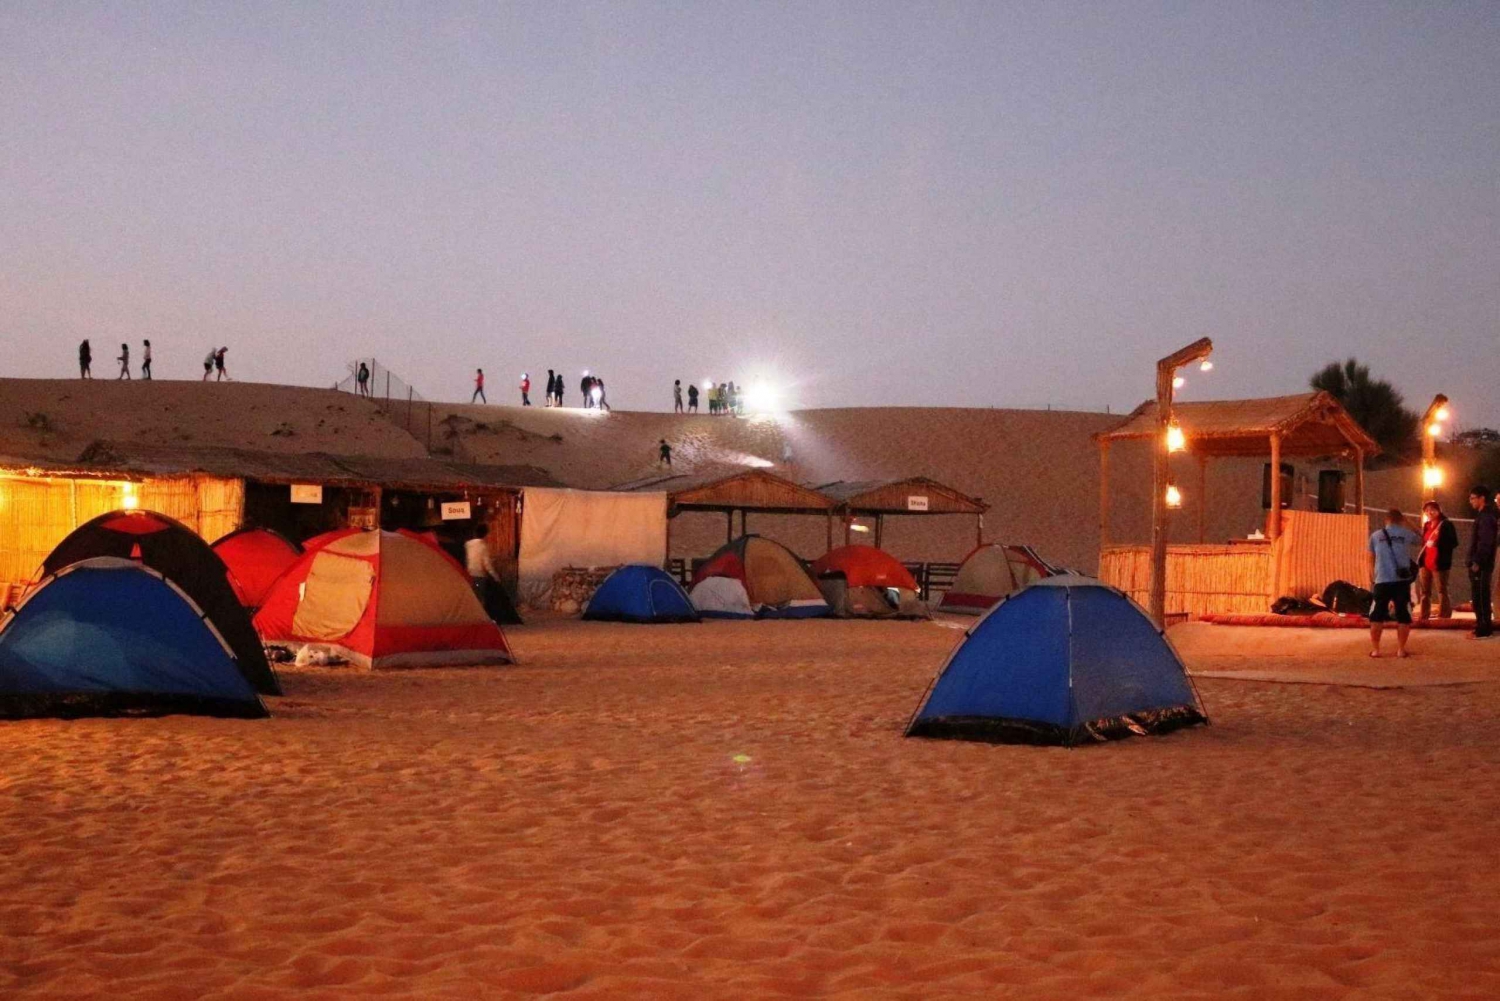 Notte nel deserto sotto le stelle Dune Bash Giro in cammello bbq Cena